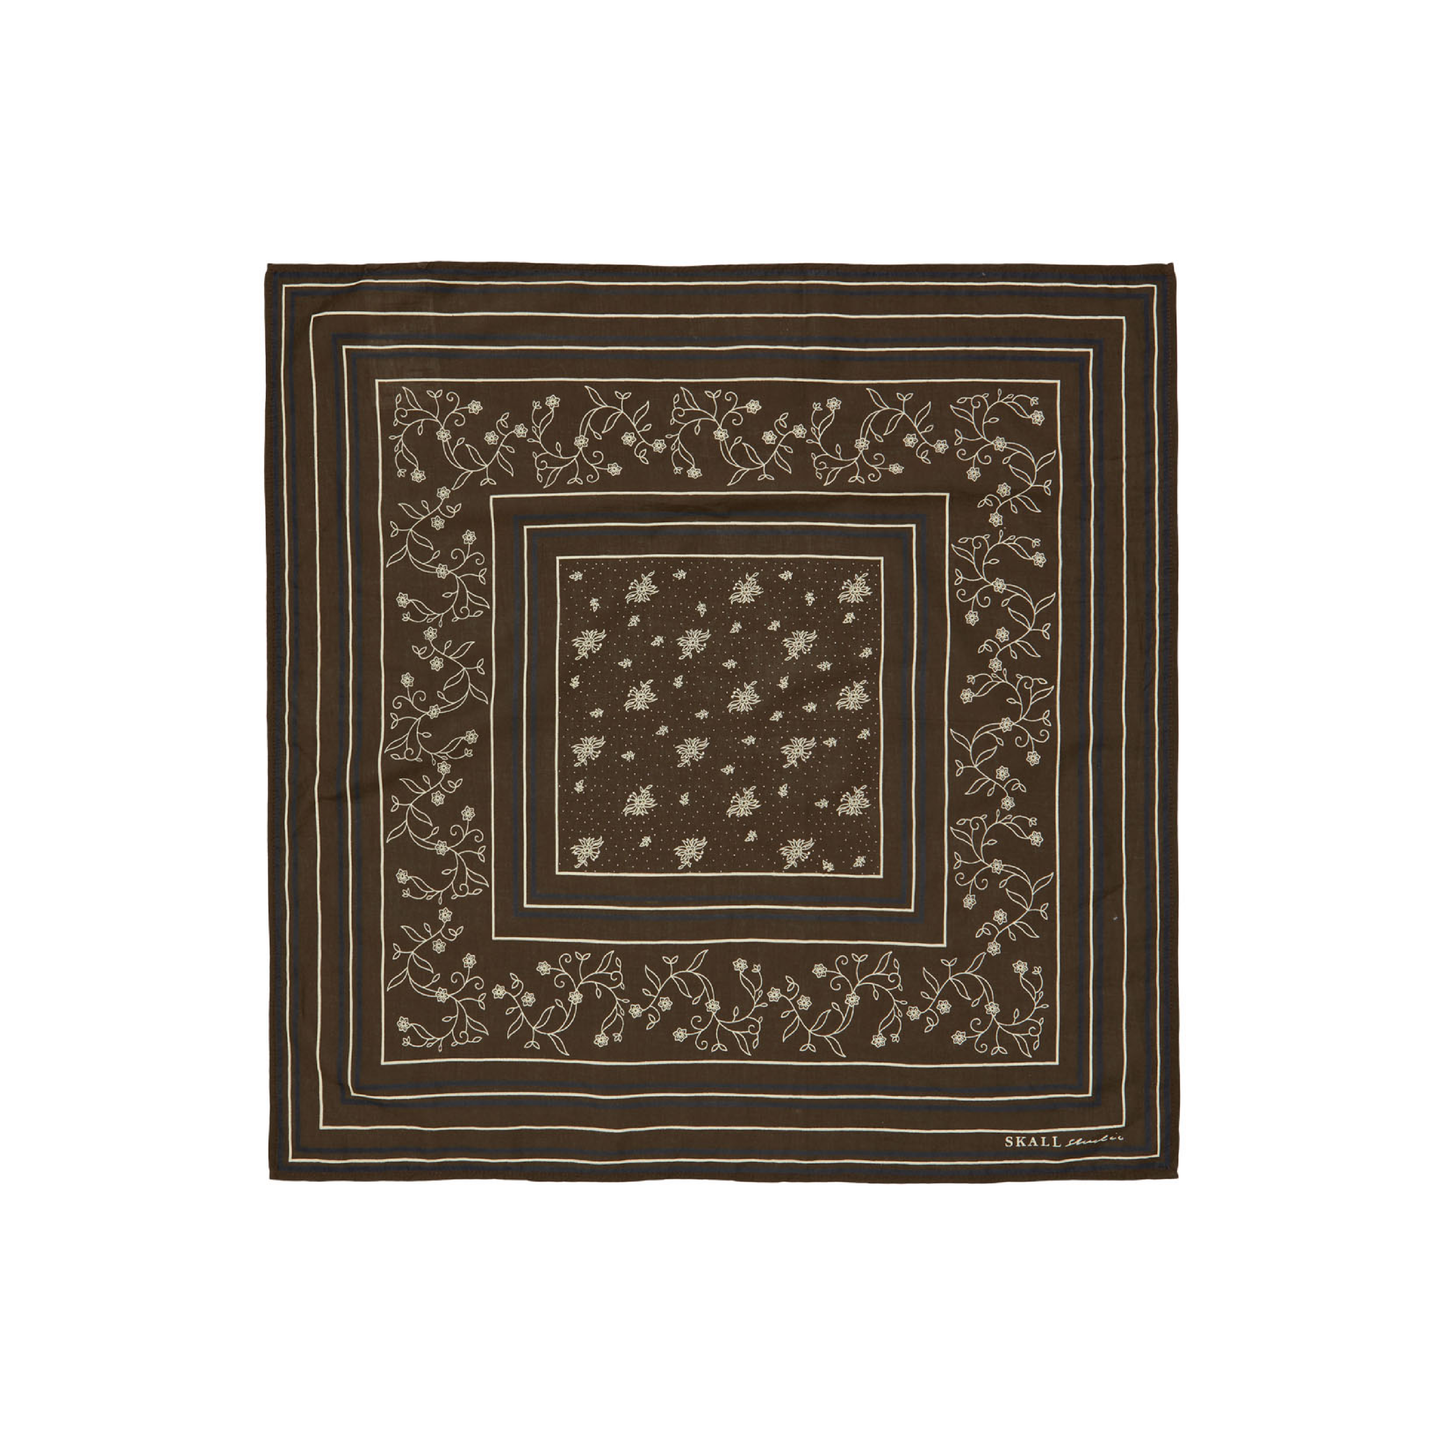 Skall Classic Scarf, Dark Brown (55x55 cm)